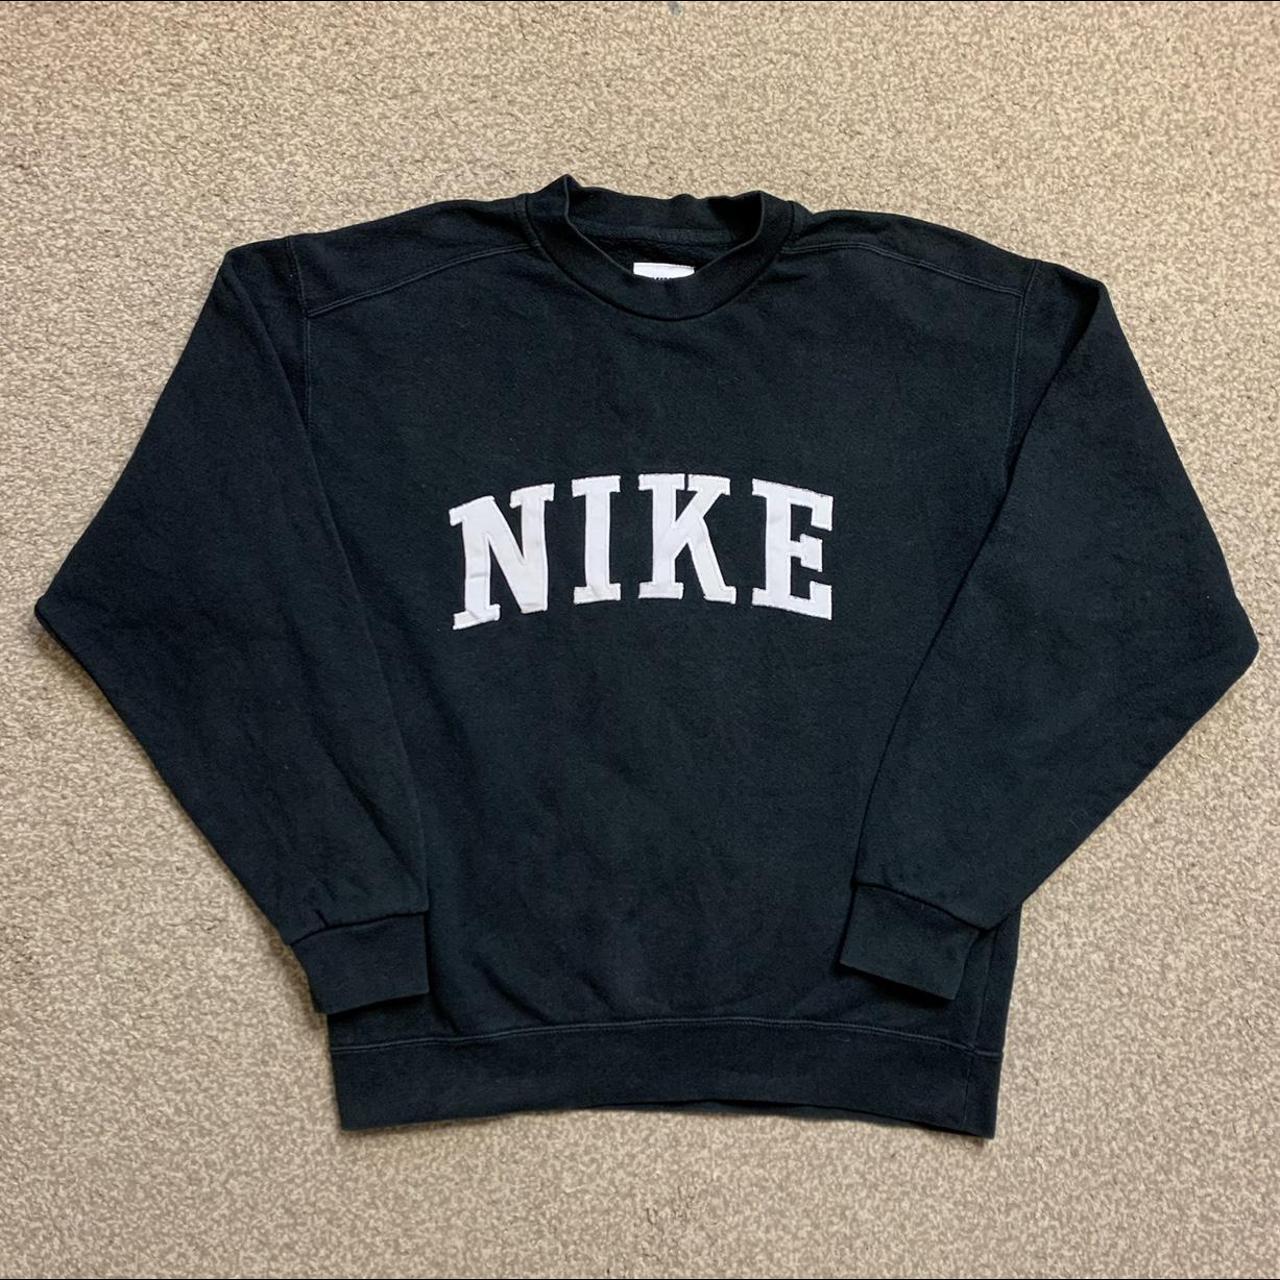 Nike Vintage Sweatshirt Retro 90s Spellout Spell Out... - Depop